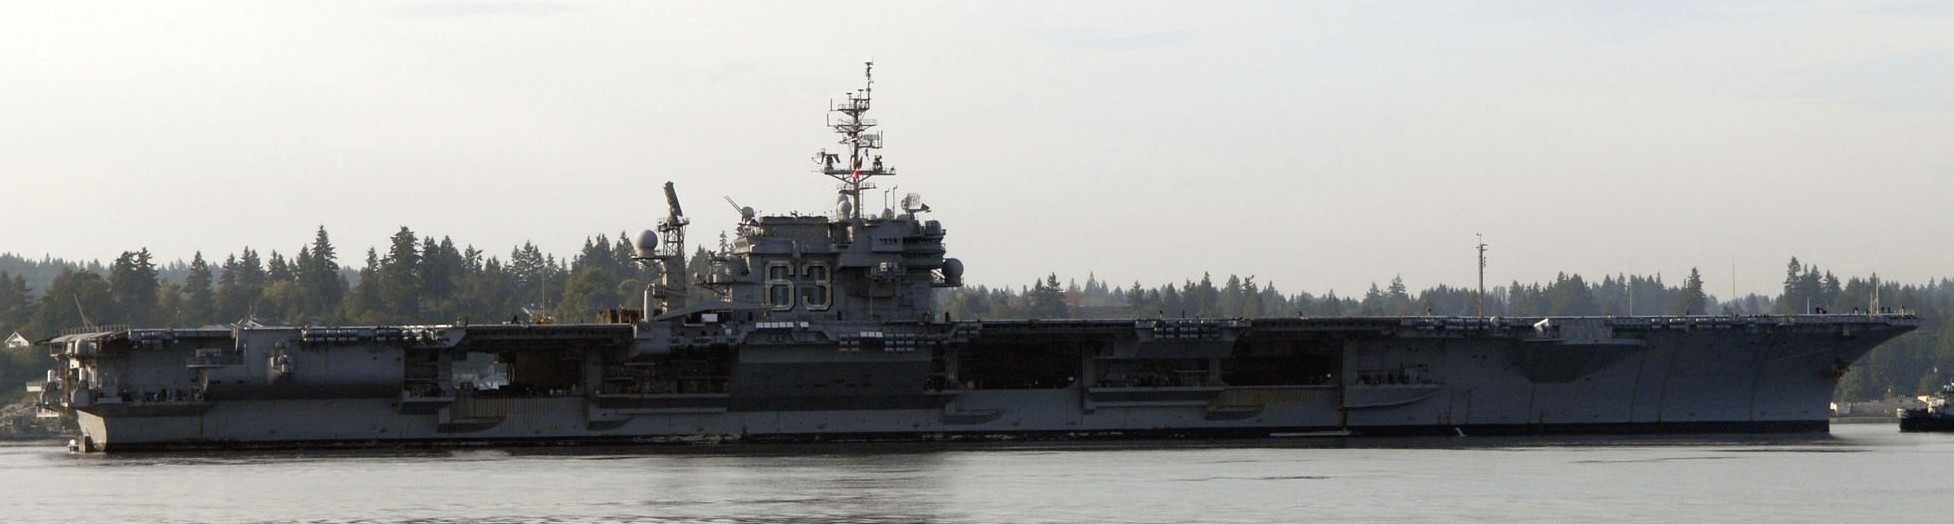 cv-63 uss kitty hawk aircraft carrier us navy puget sound naval shipyard washington decommissioning 2008 03